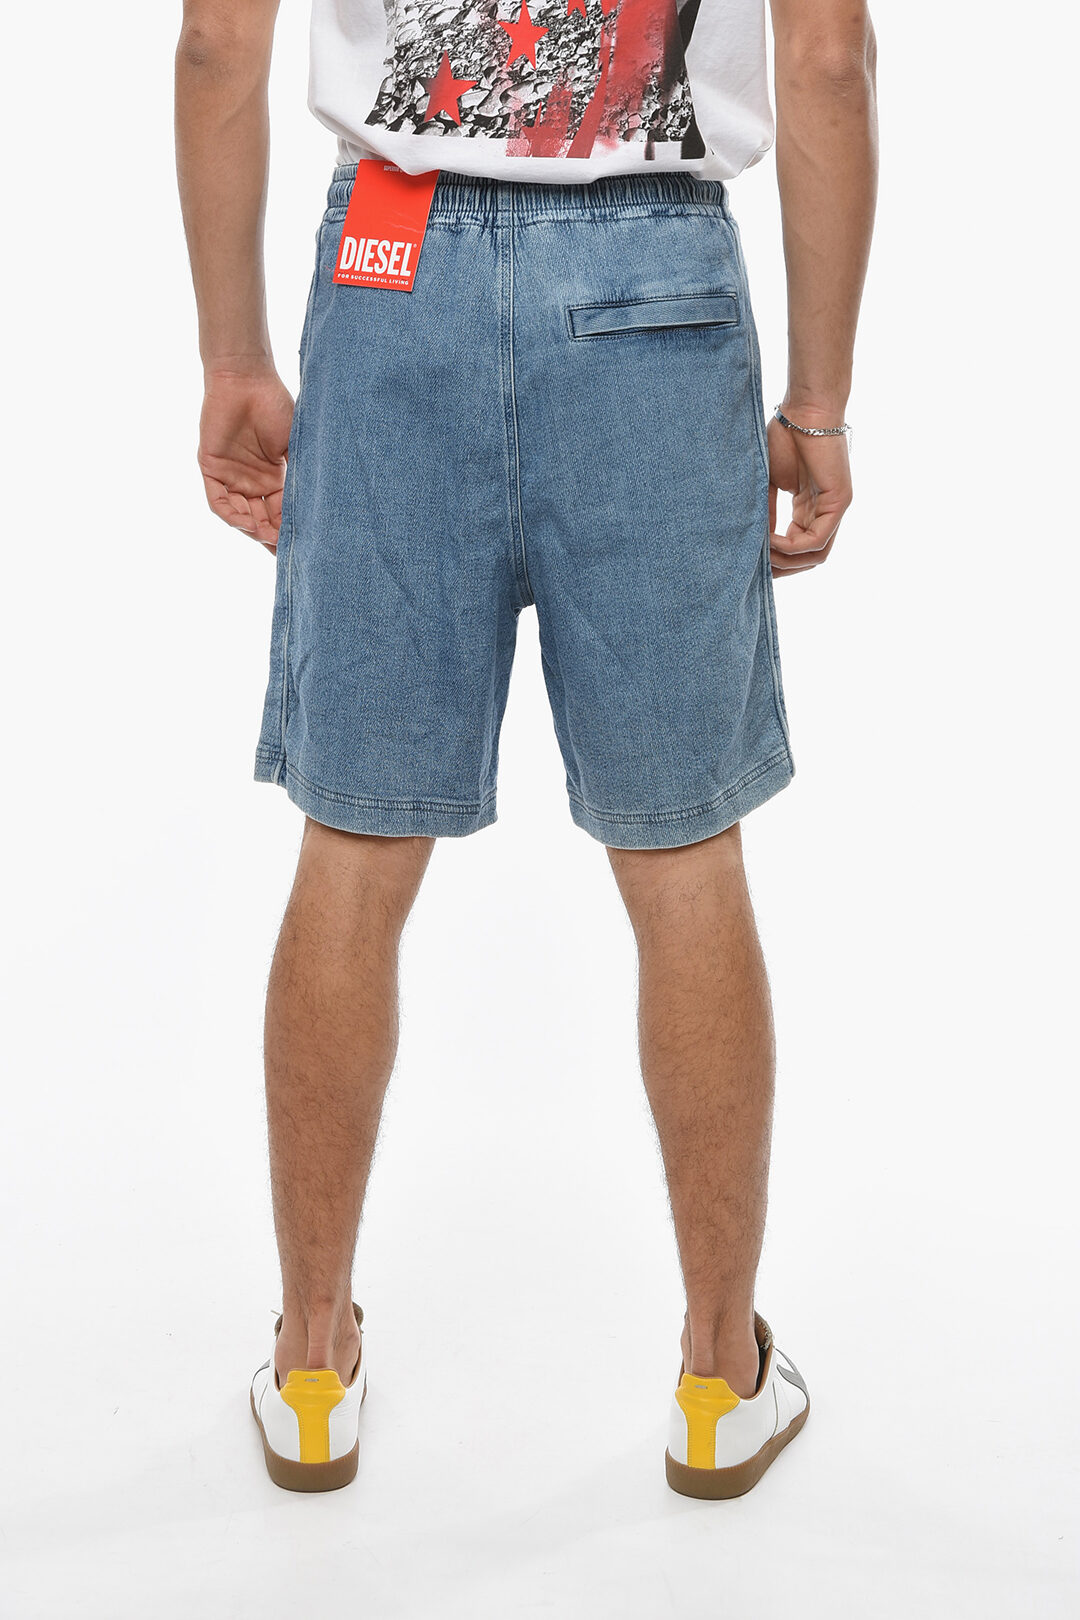 het formulier Dakloos Kloppen Diesel TRACK DENIM Elastic Waistband BOXY Shorts men - Glamood Outlet